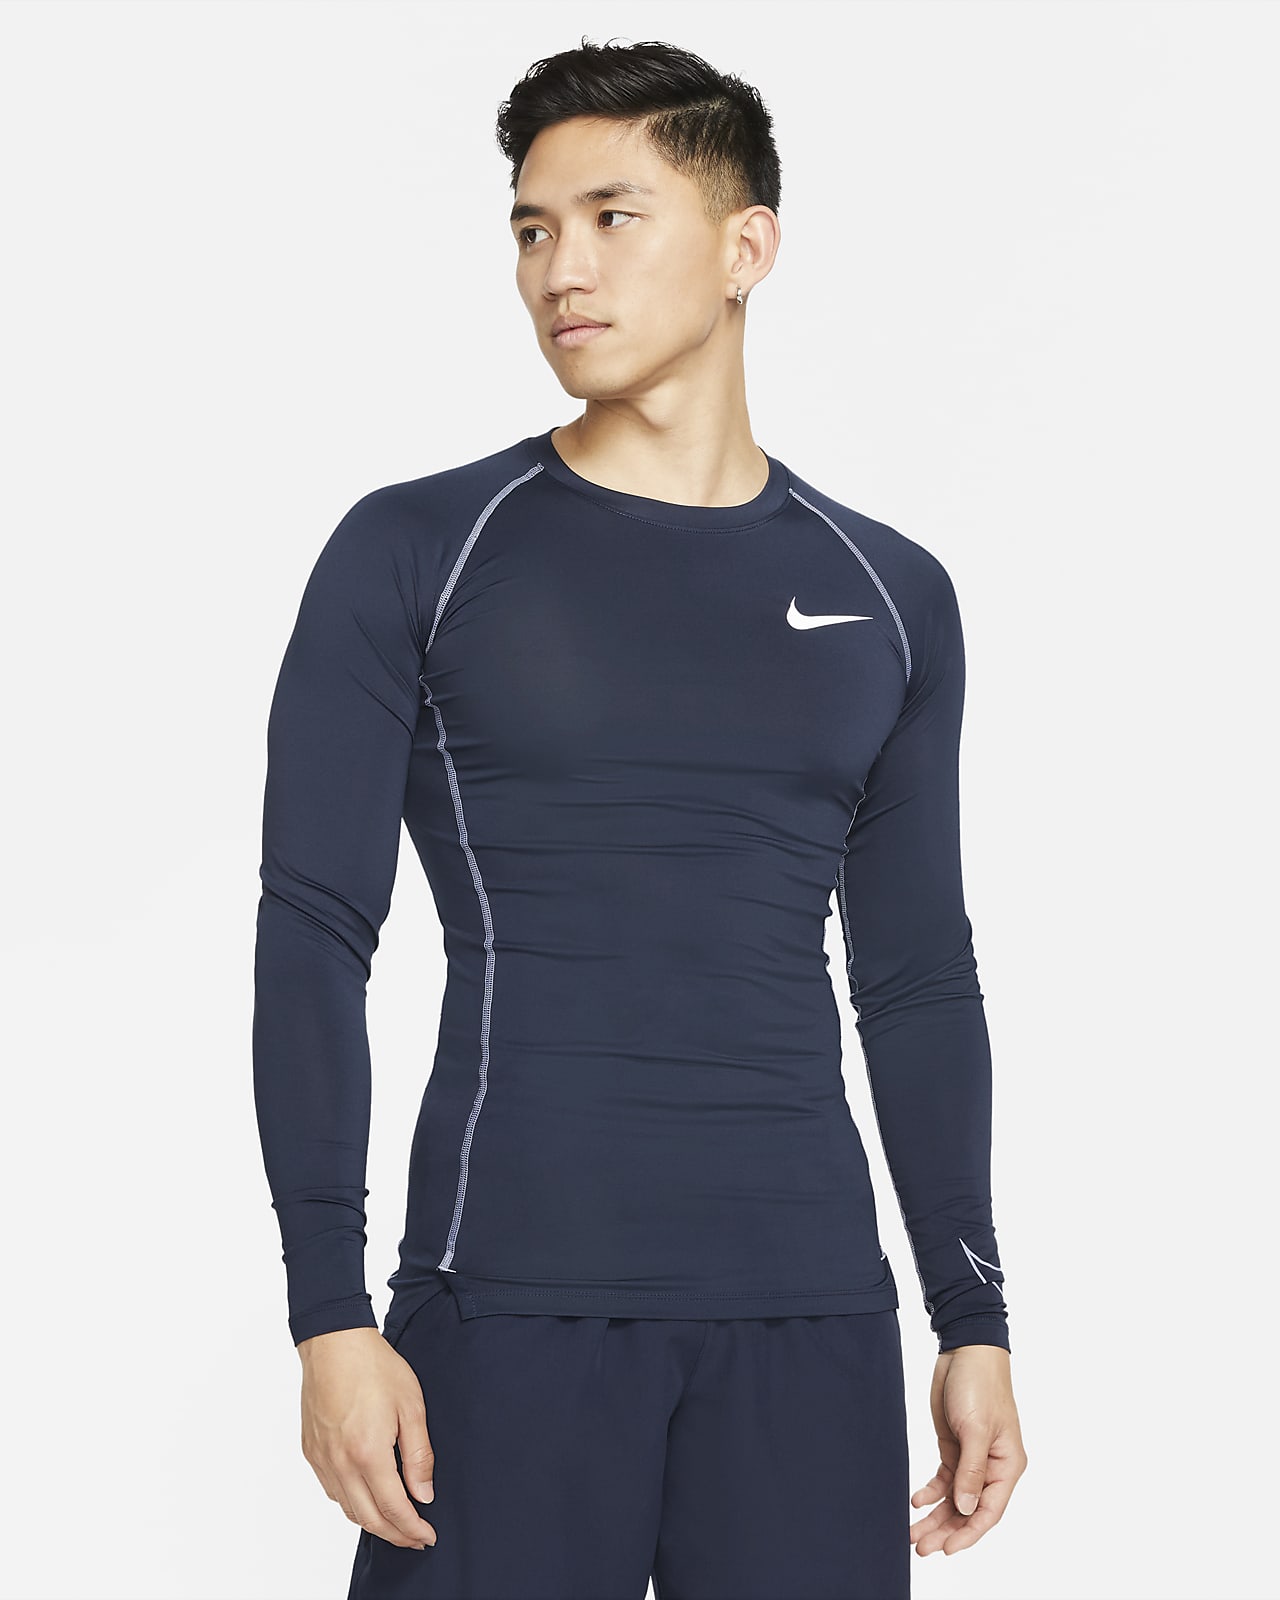 Nike Pro Dri-FIT Men's Tight Fit Long-Sleeve Top